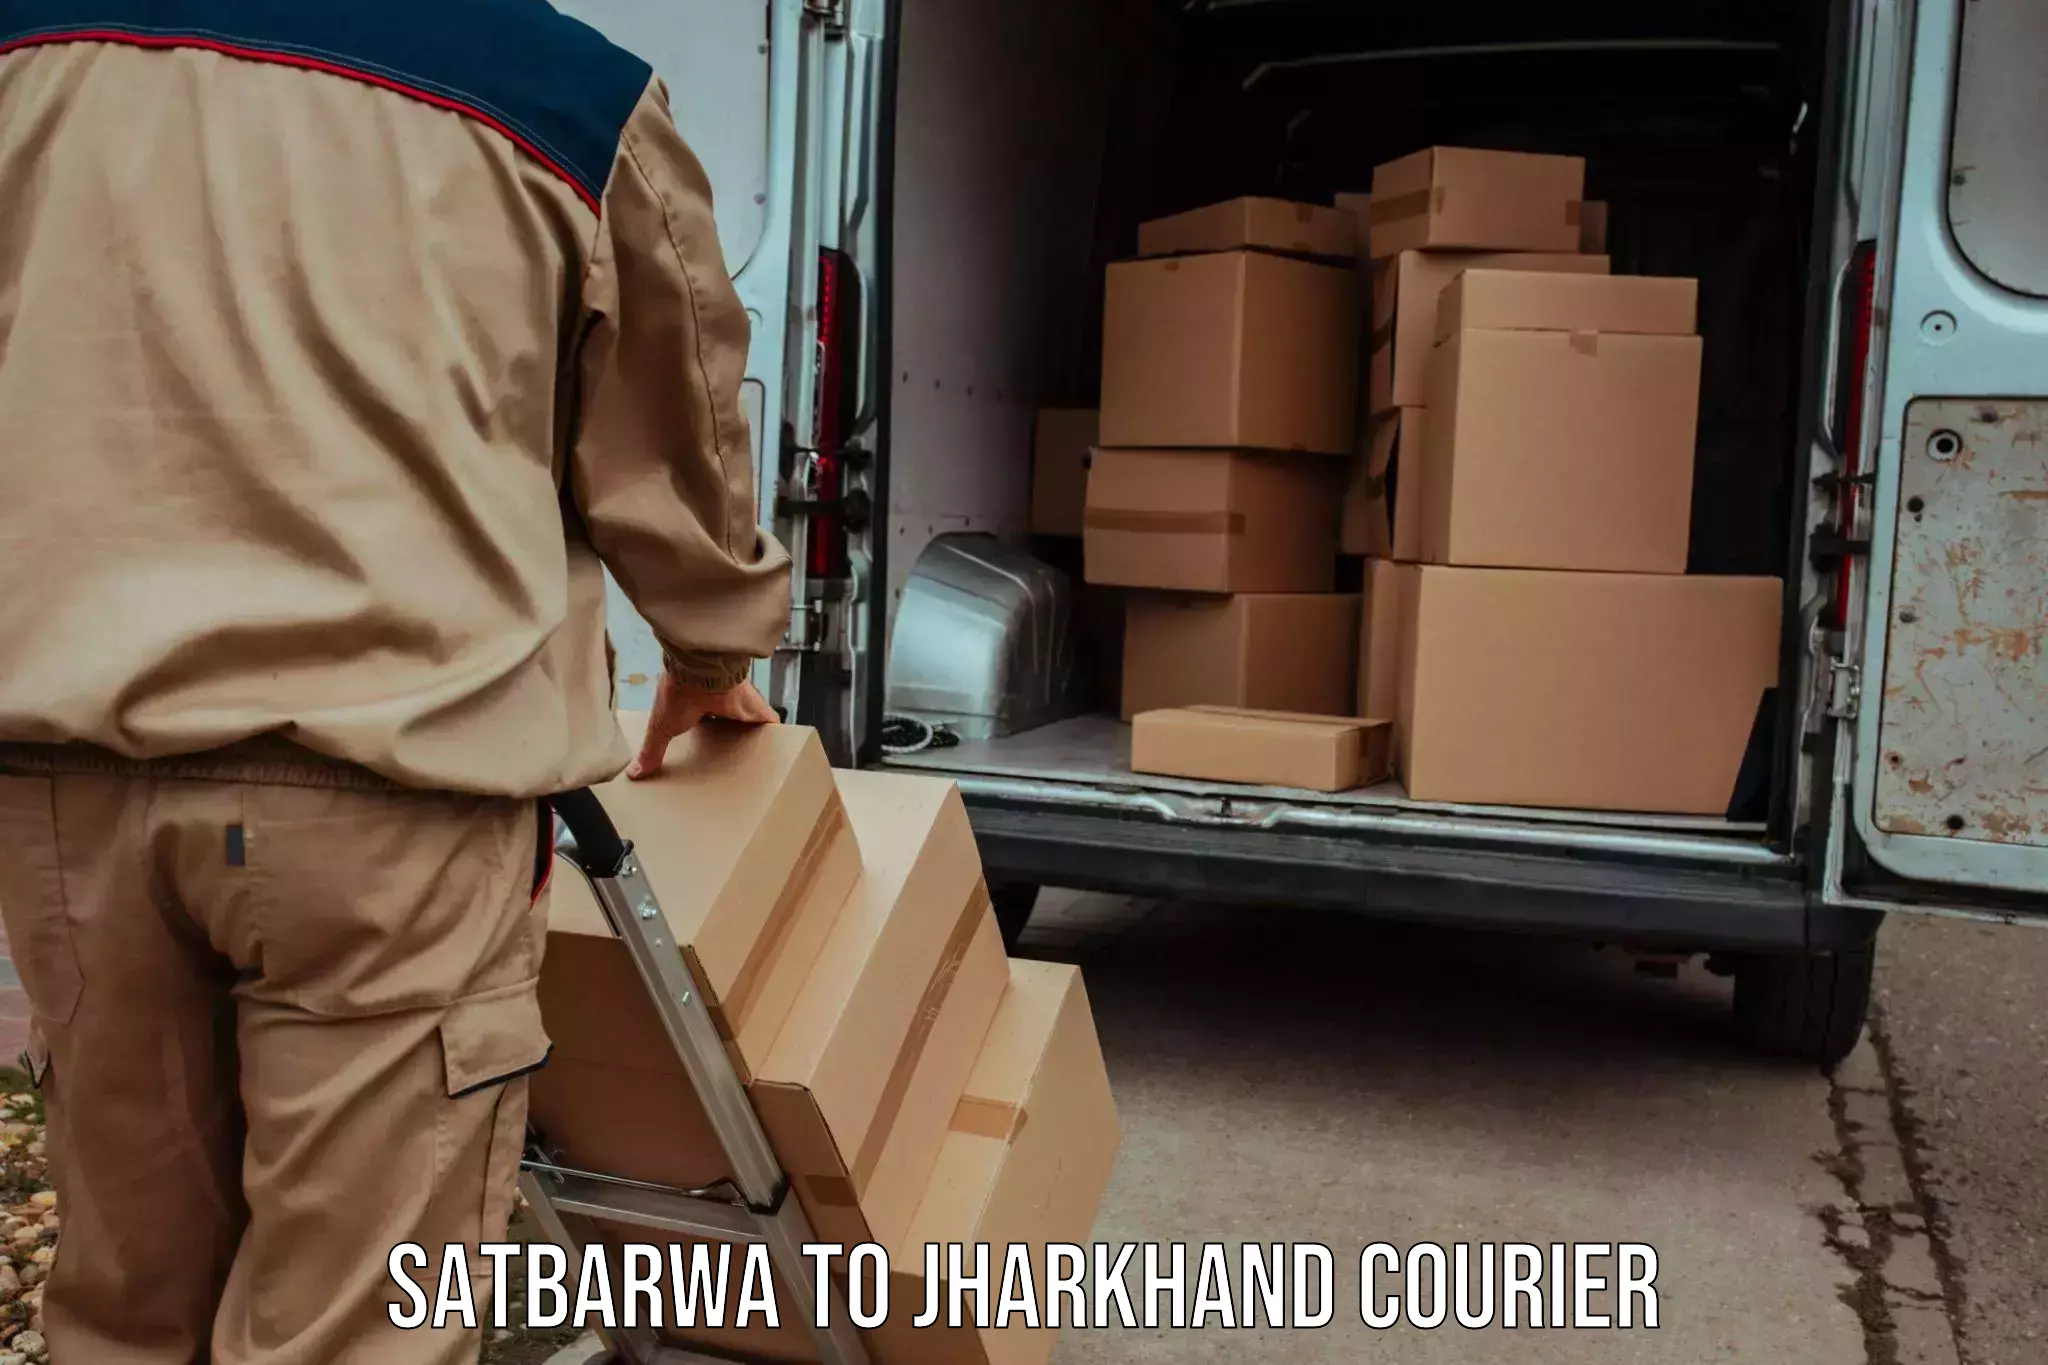 High-performance logistics Satbarwa to Peterbar